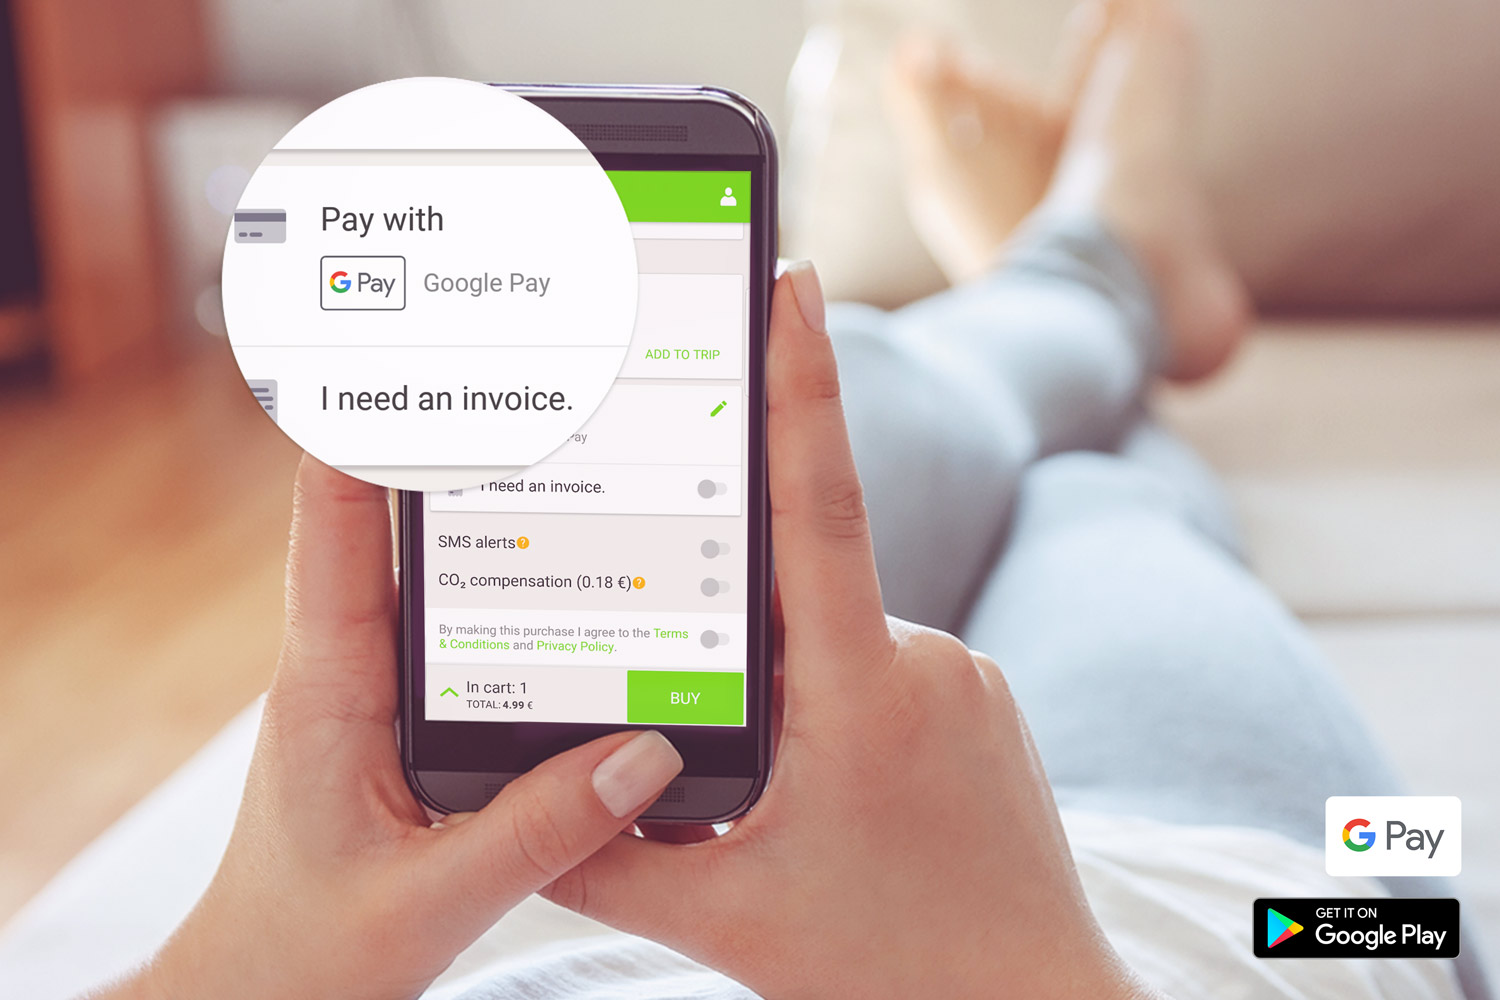 FlixBus integrează Google Pay în aplicația sa de mobil